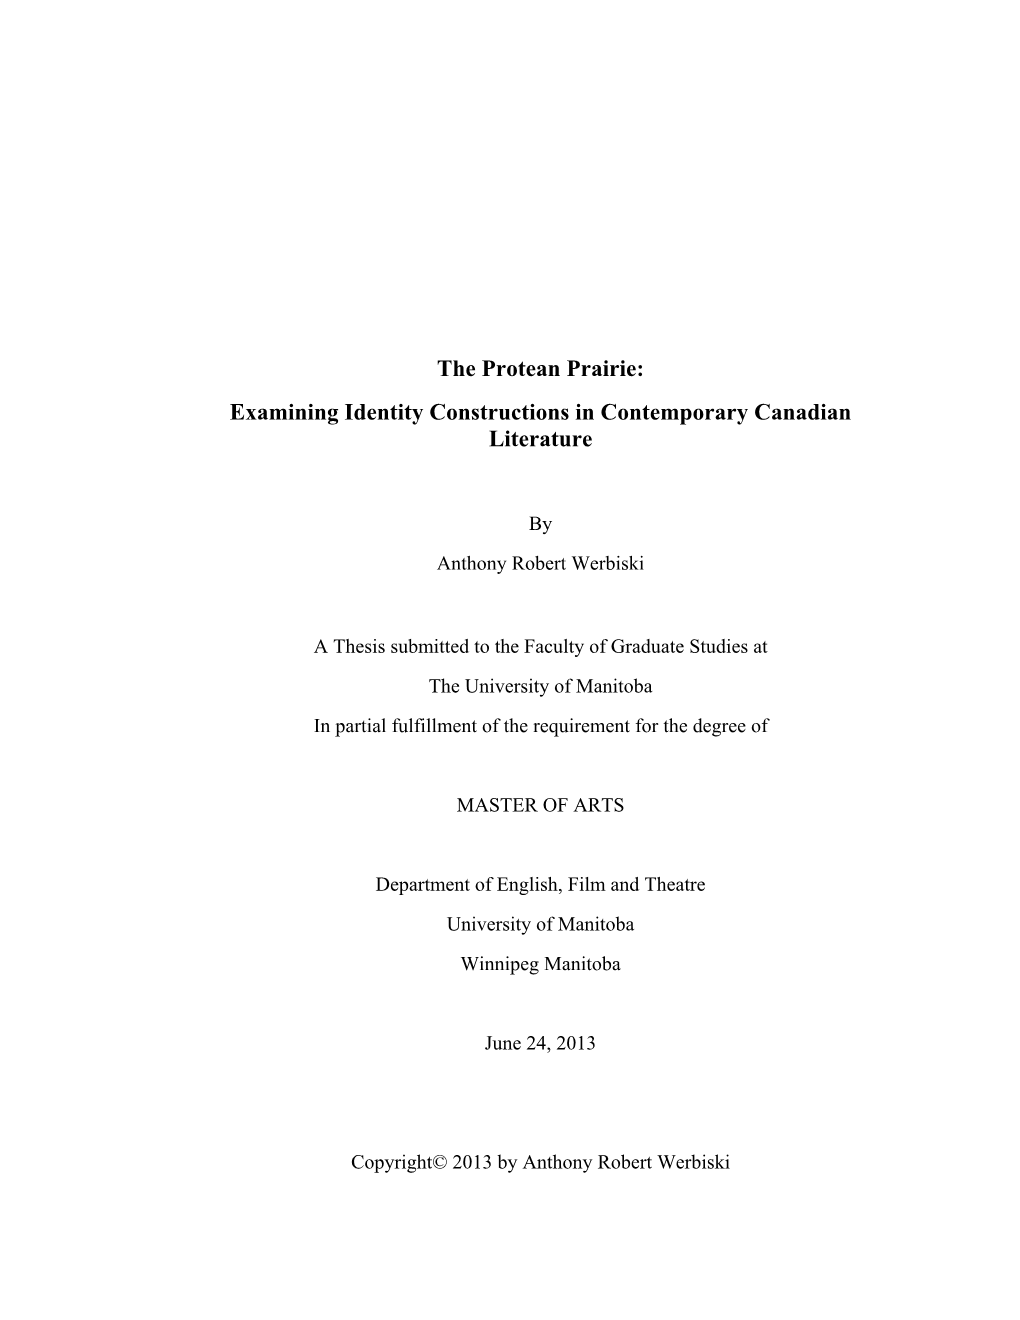 Examining Identity Constructions in Contemporary Canadian Literature